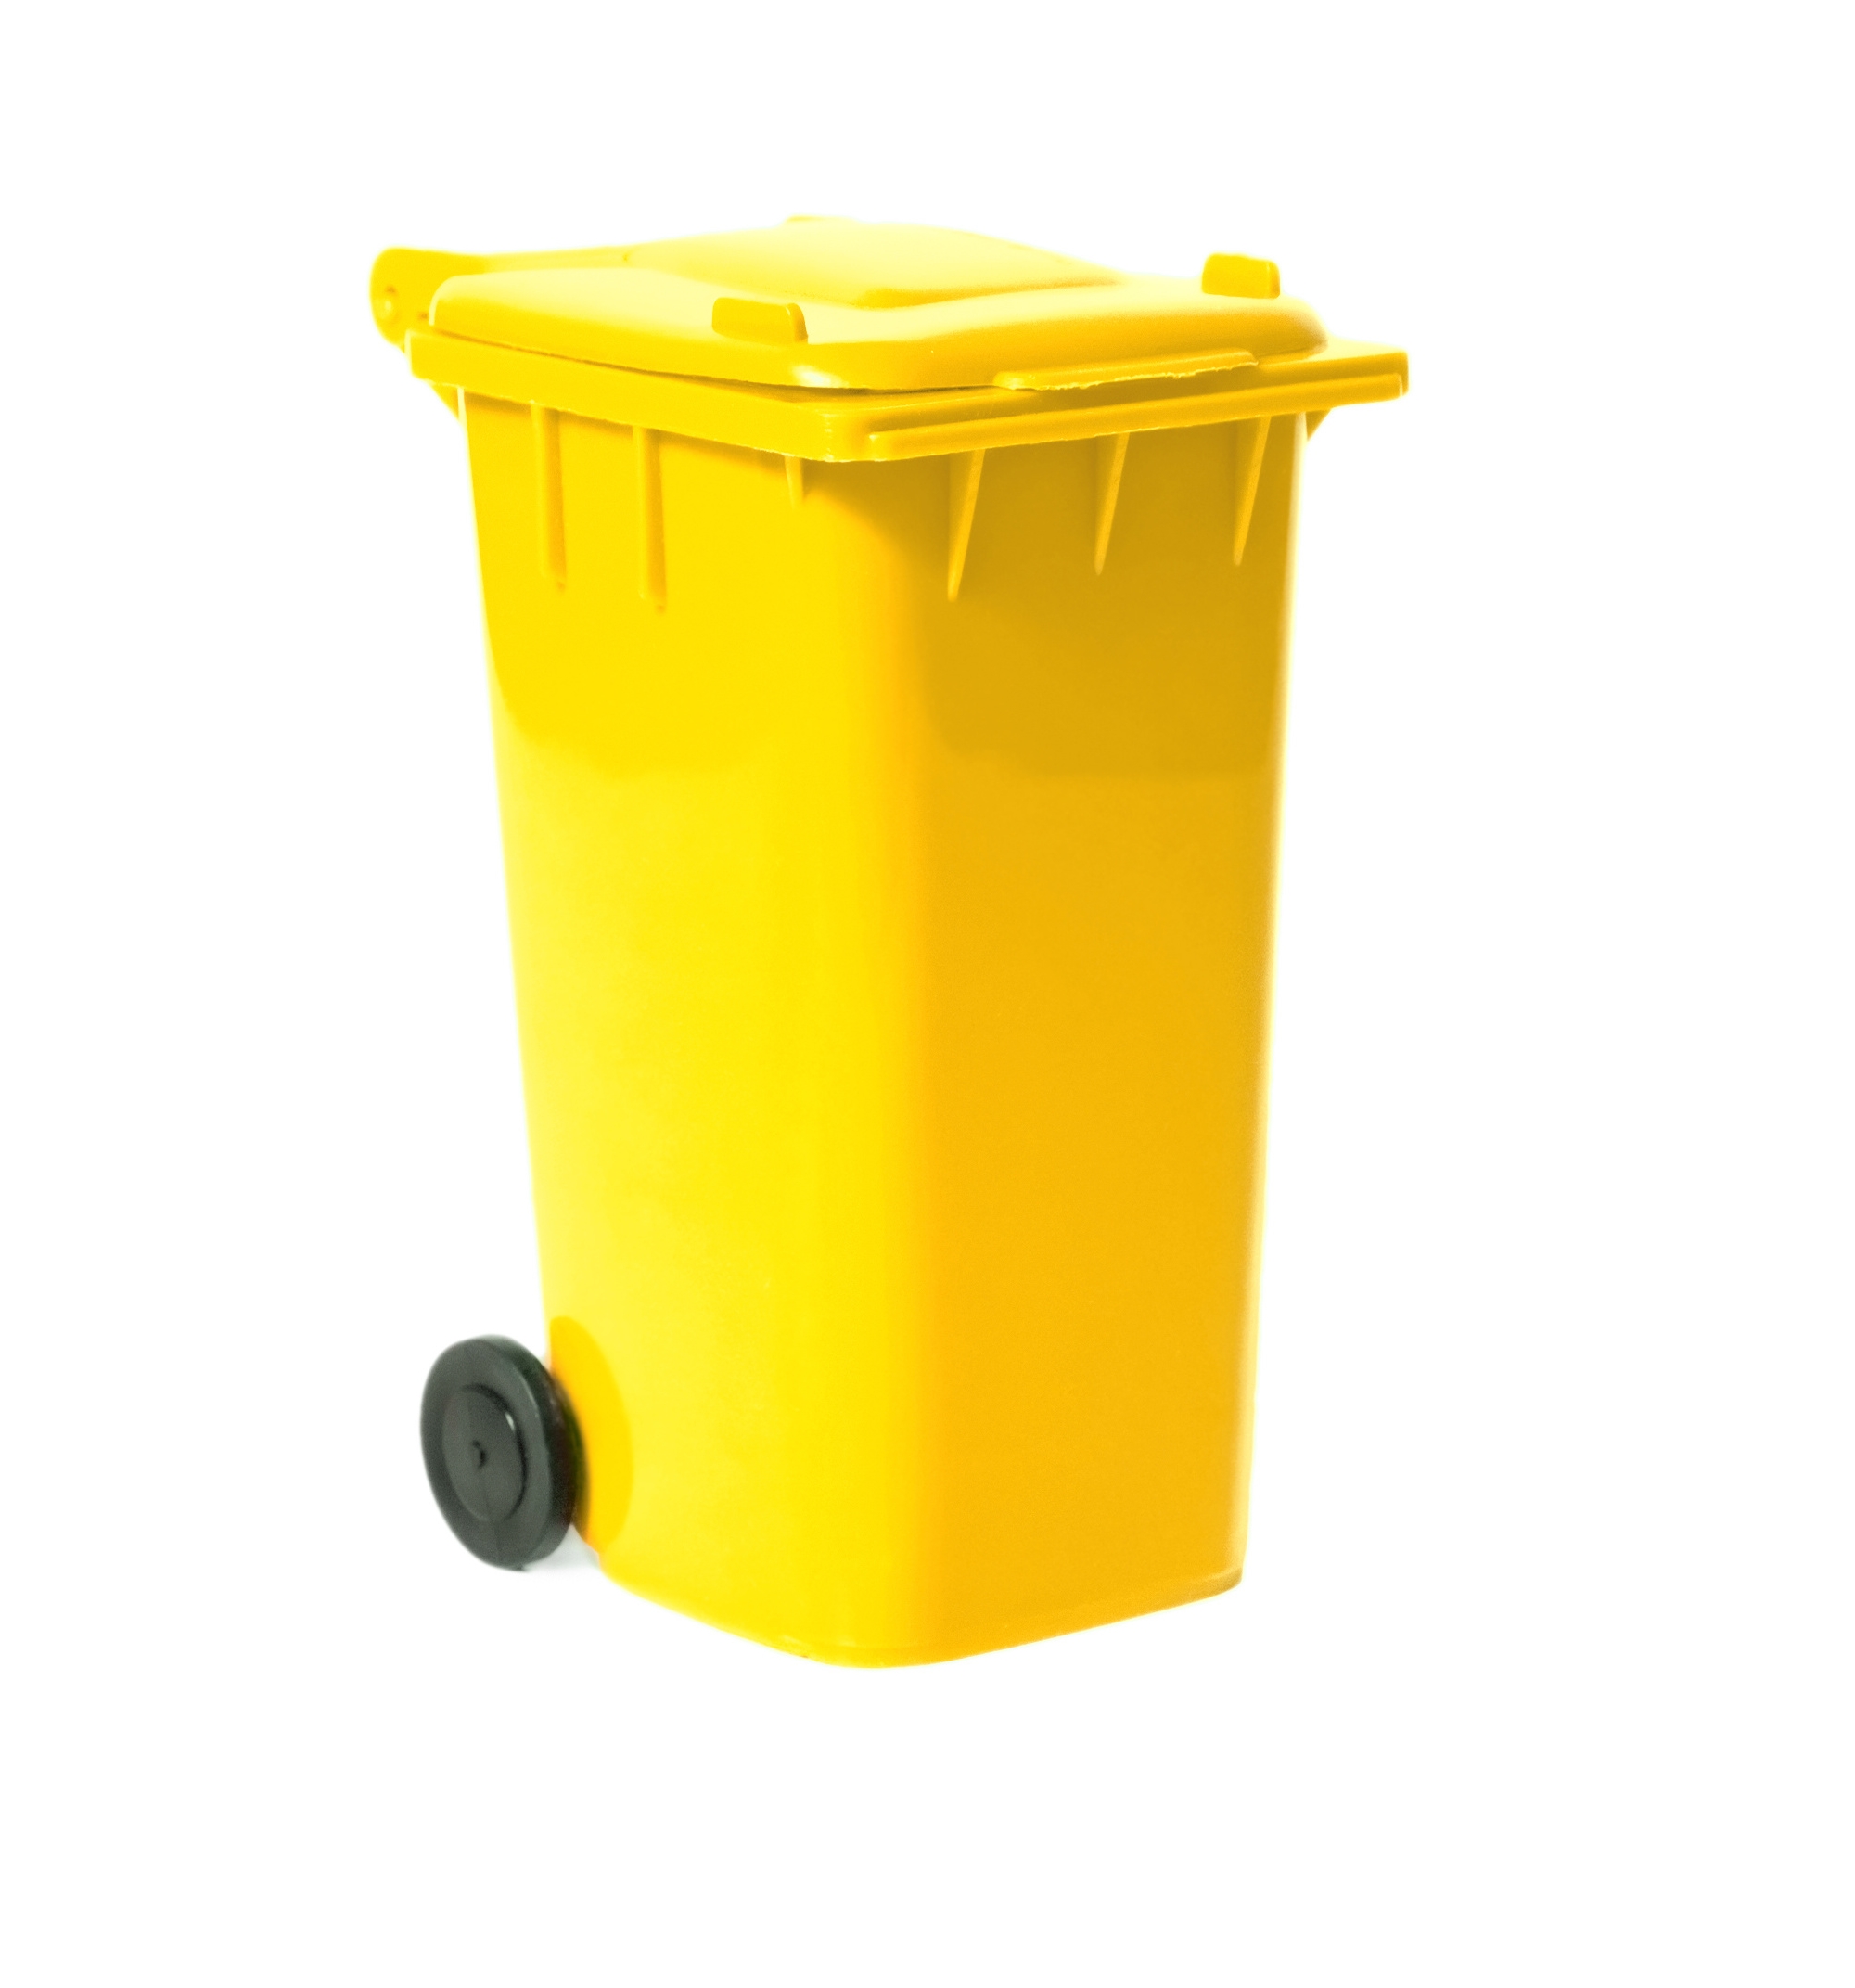 Recycle bin/ Wheelie bin 240L Yellow - Supreme Hygiene
